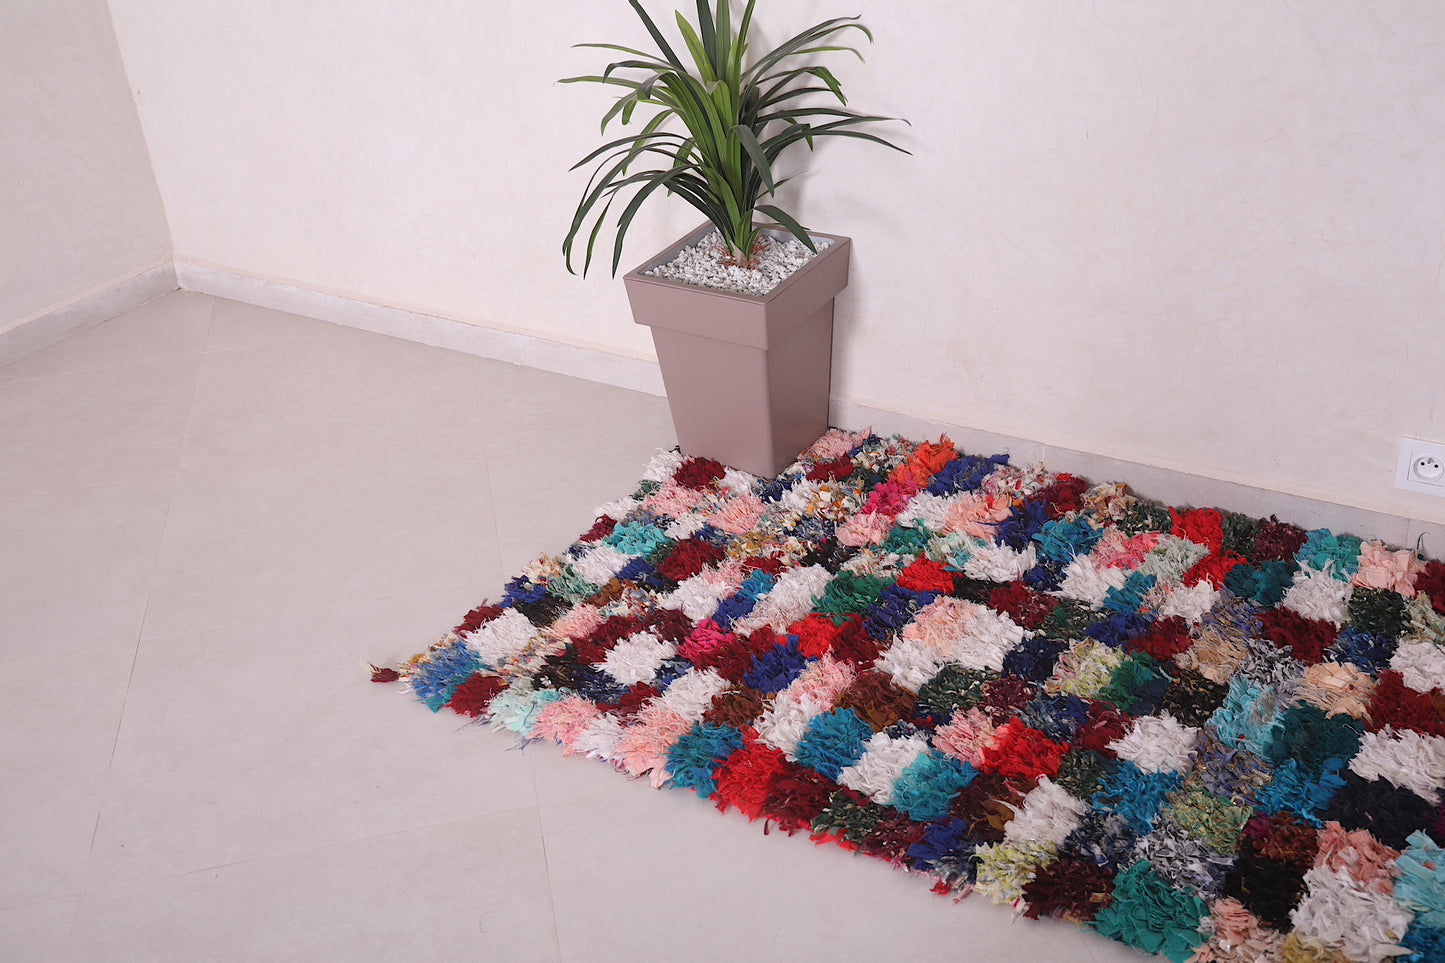 Colorful Runner Boucherouite rug 3 X 7.6 Feet